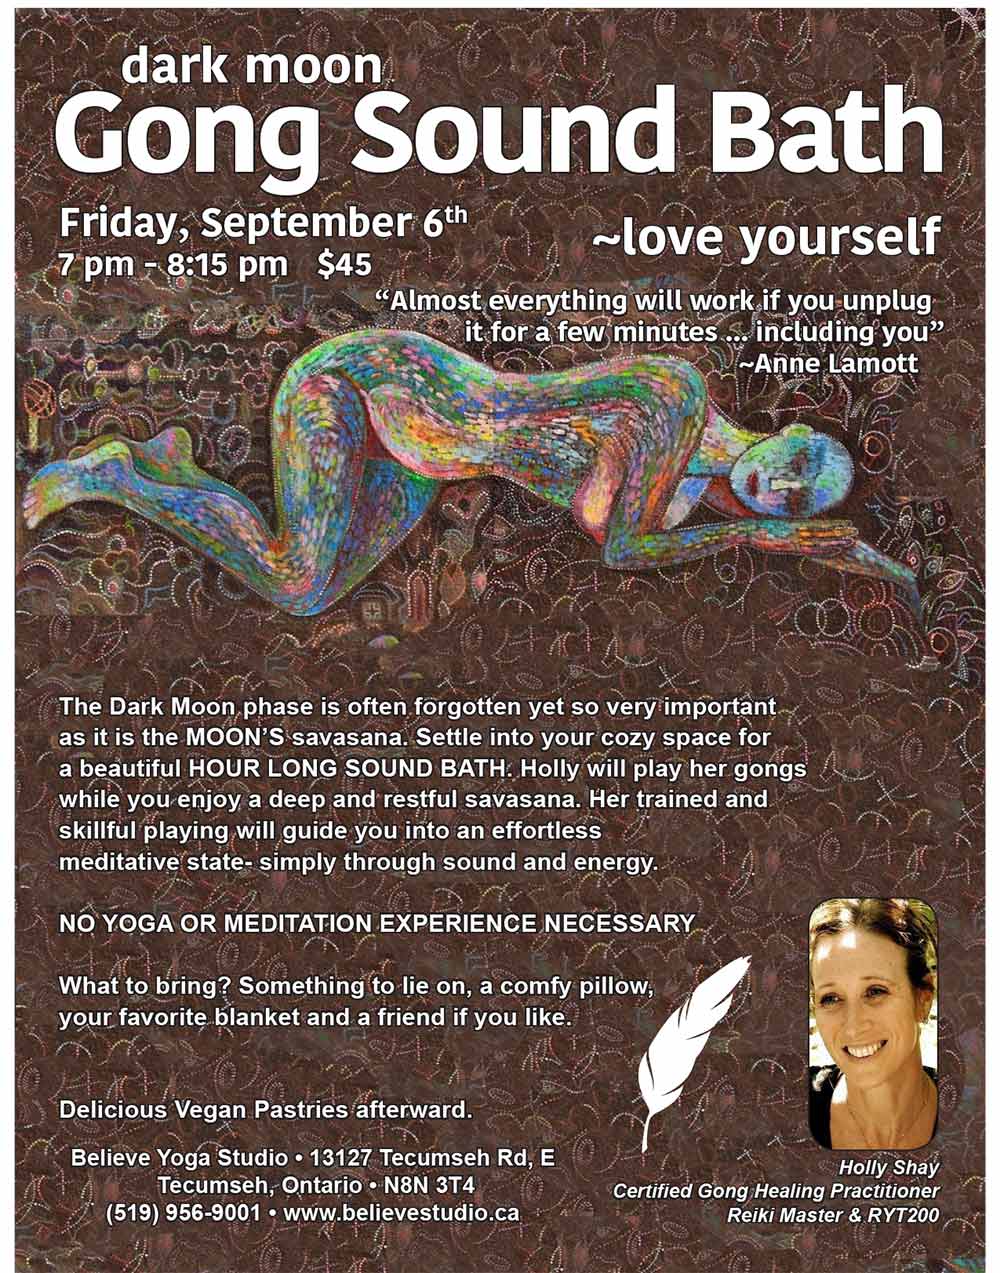 Dark Moon Gong Sound Bath, September 6, Believe Yoga Studio, Tecumseh, Ontario 